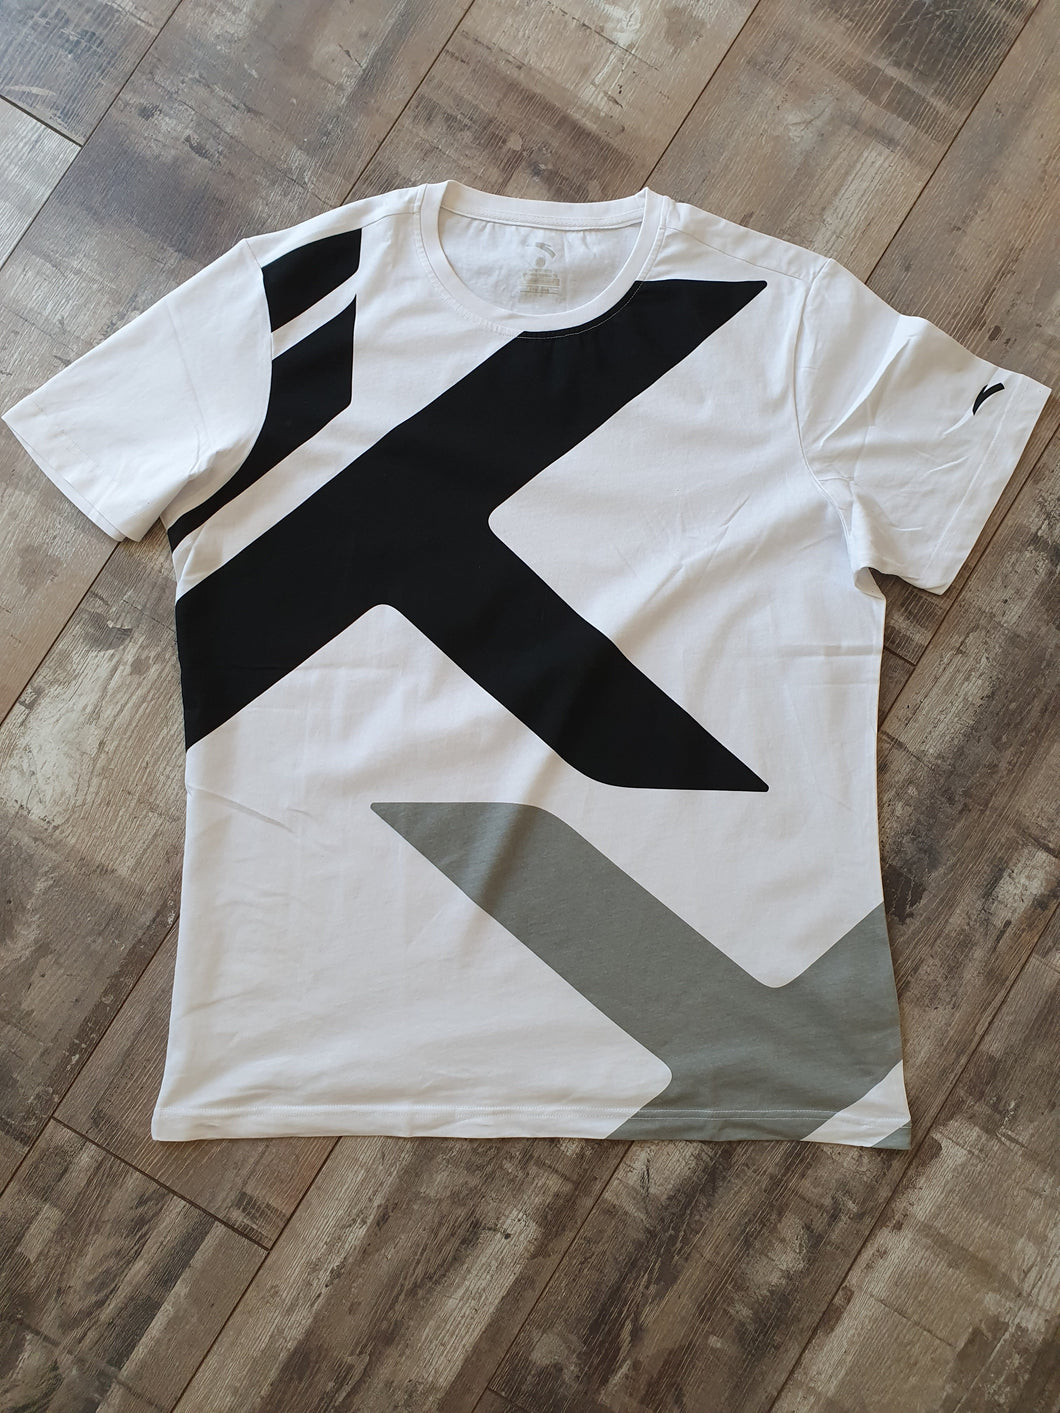 Anta Klay Thompson T-Shirt Size 3XL fits like a Size Large